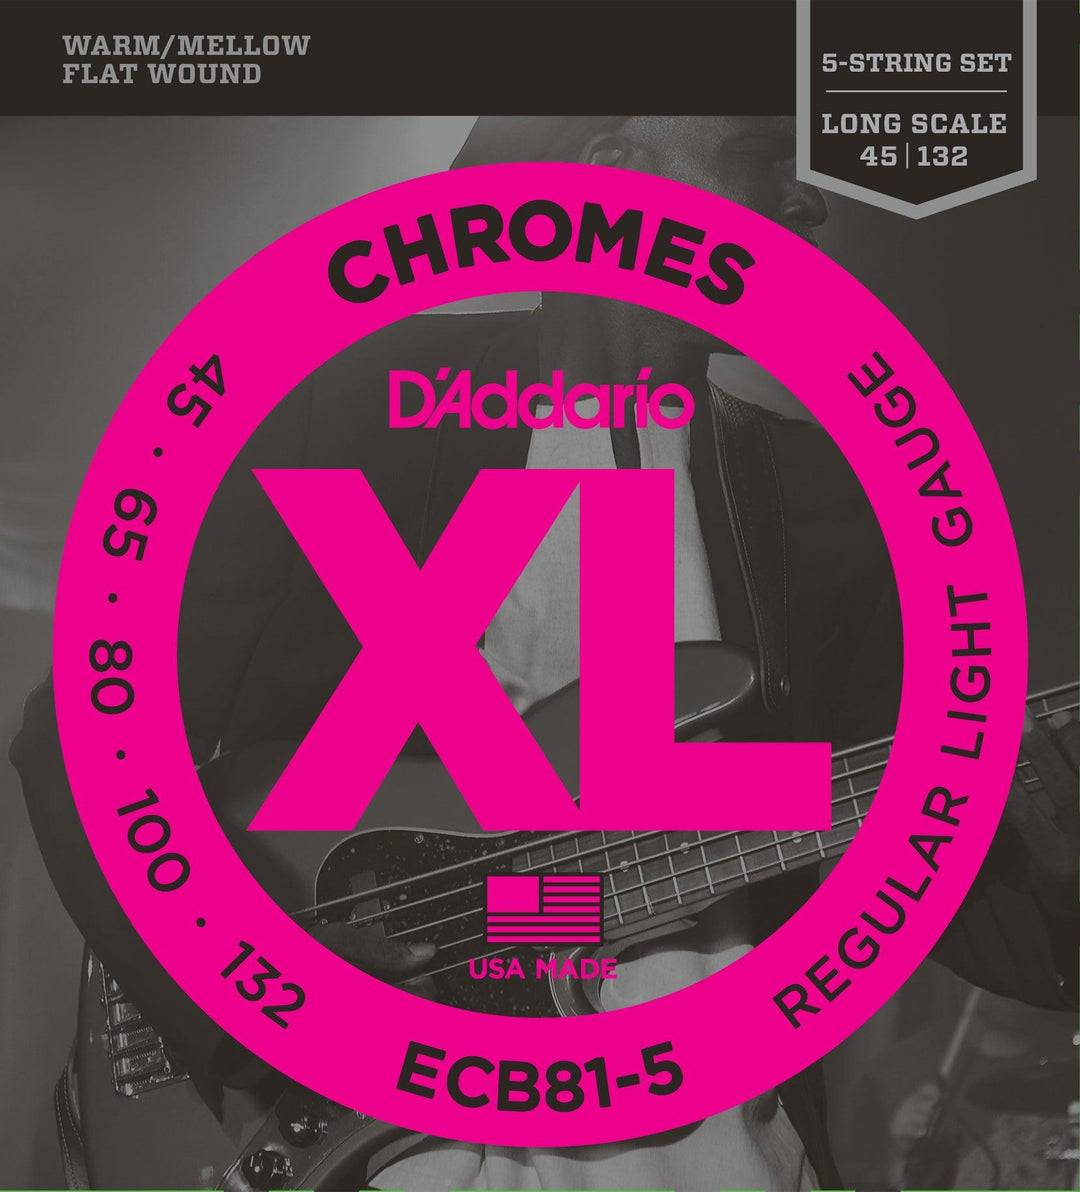 D'Addario Chromes 5-String Bass Guitar String Set, Flatwound, ECB81-5 Light .045-.132, Long Scale - A Strings